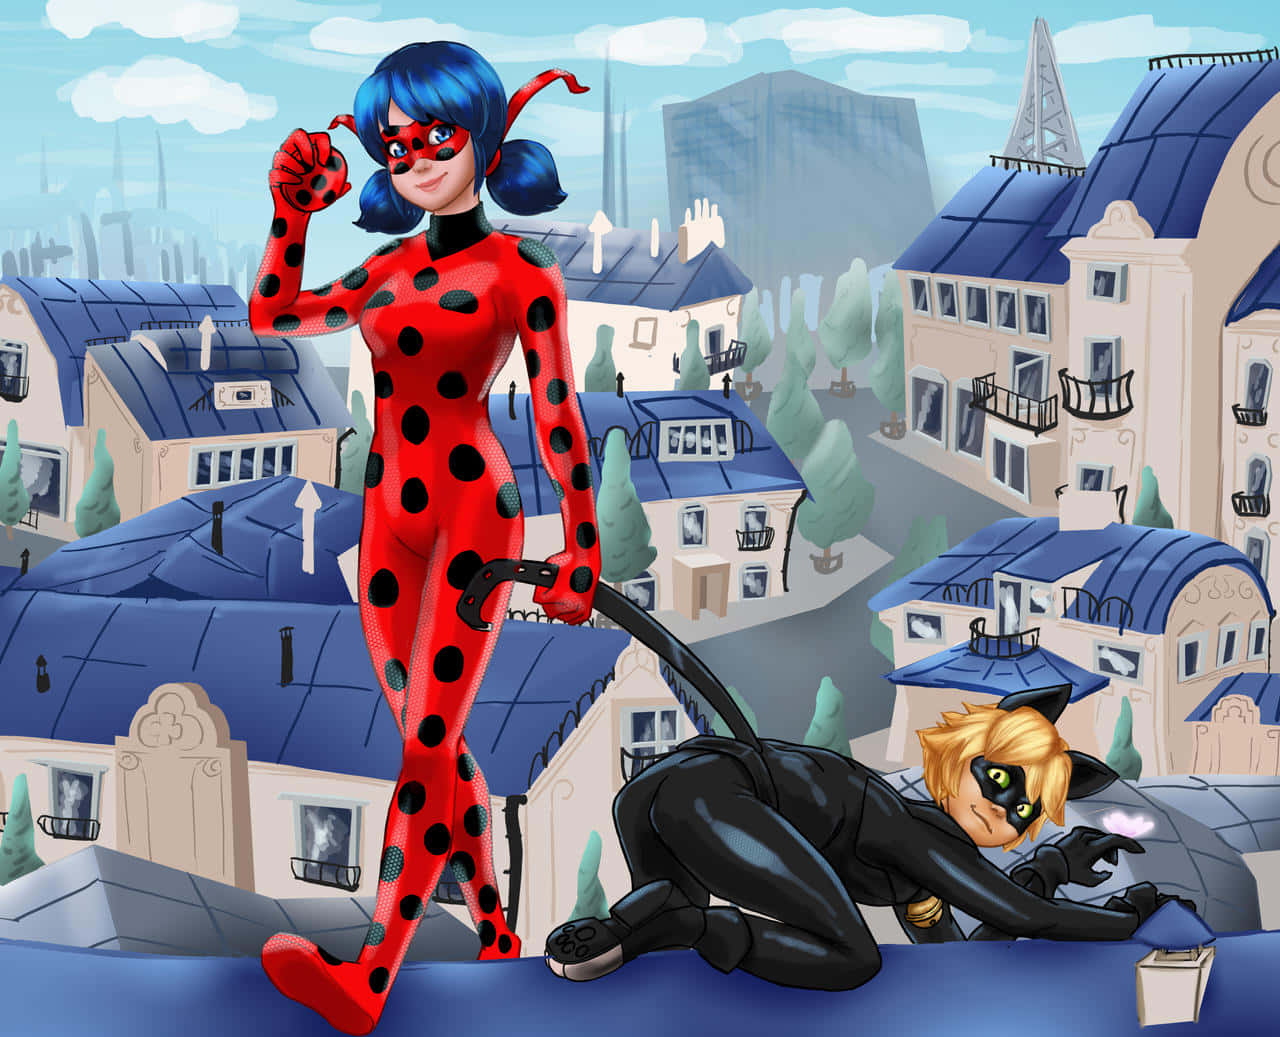 Ladybug and Cat Noir uniting their powers to save Paris!